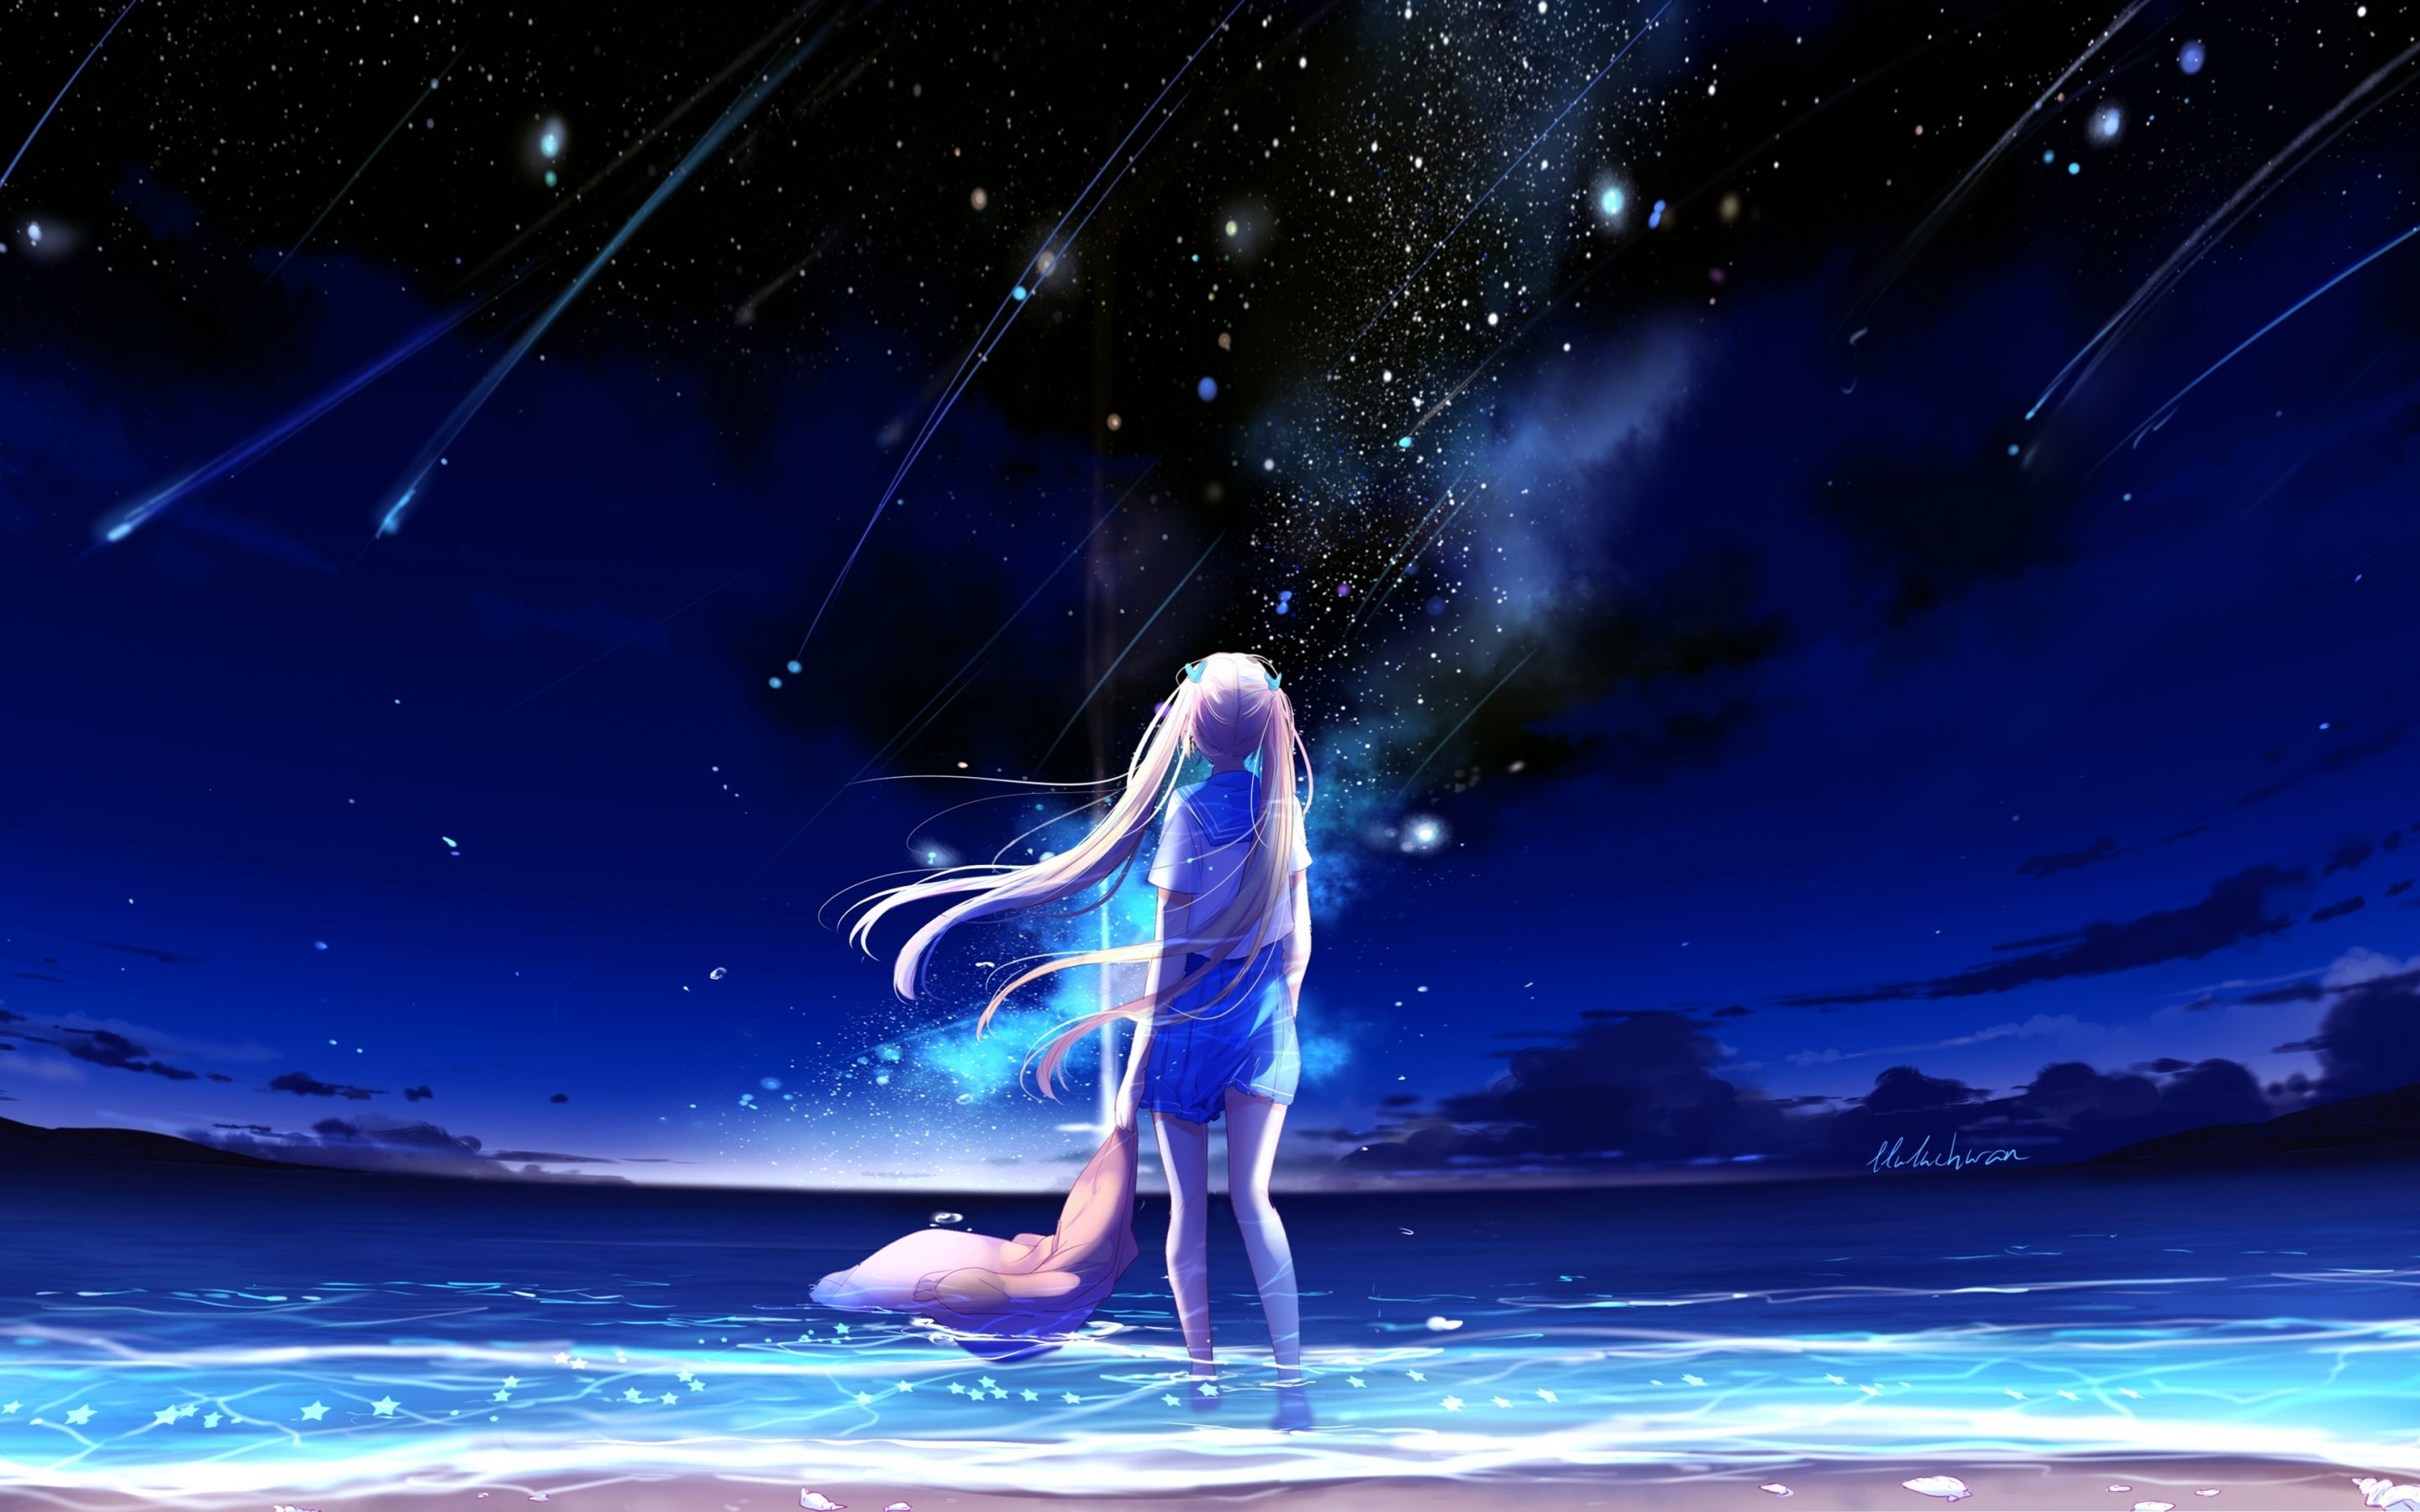 Download wallpaper 2880x1800 anime girl, outdoor, night, starfall, mac pro  retaia 2880x1800 hd background, 5622